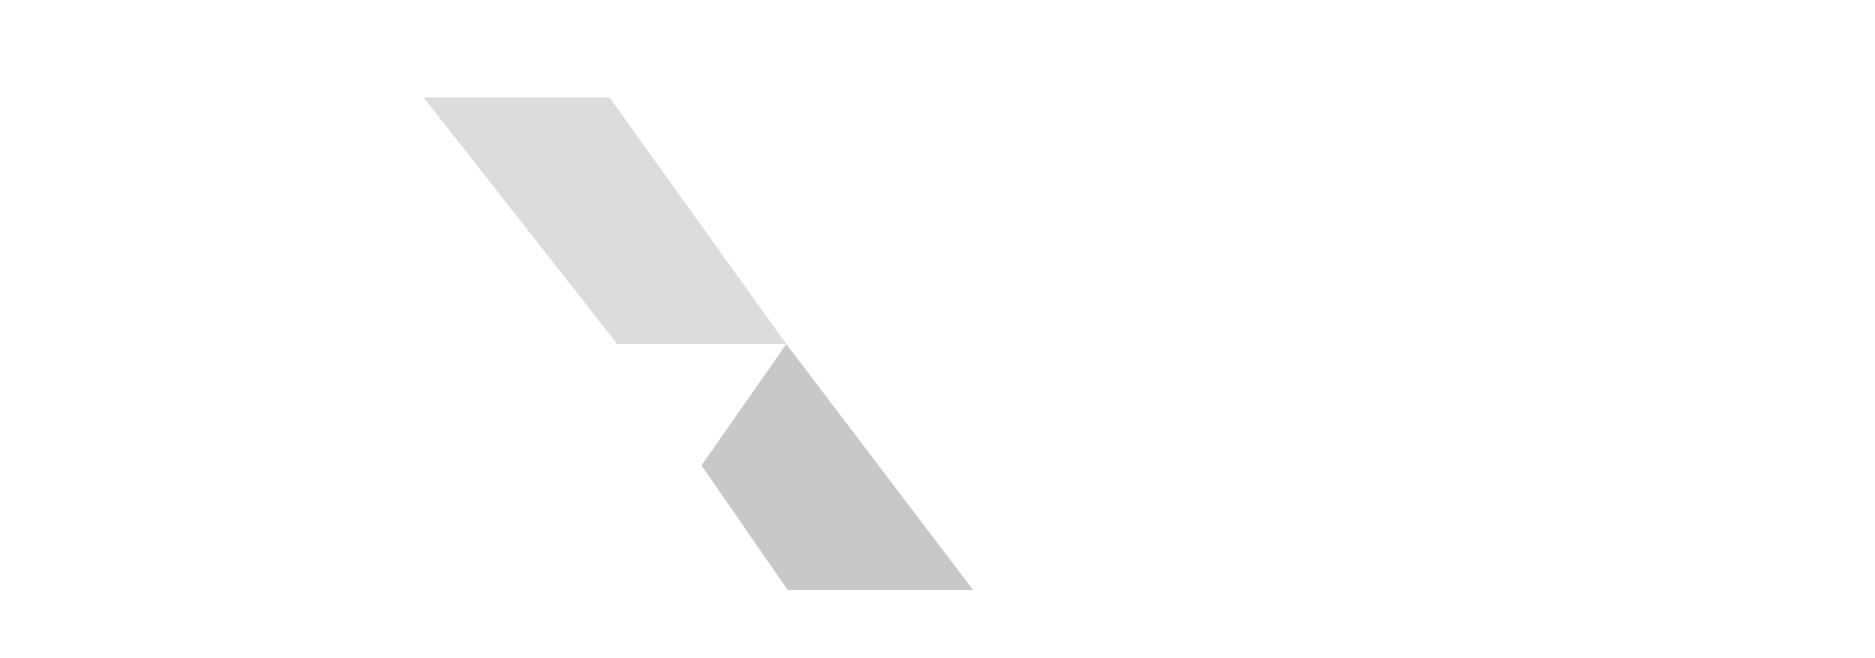 XReport_Logo_White_big_300dpi-1